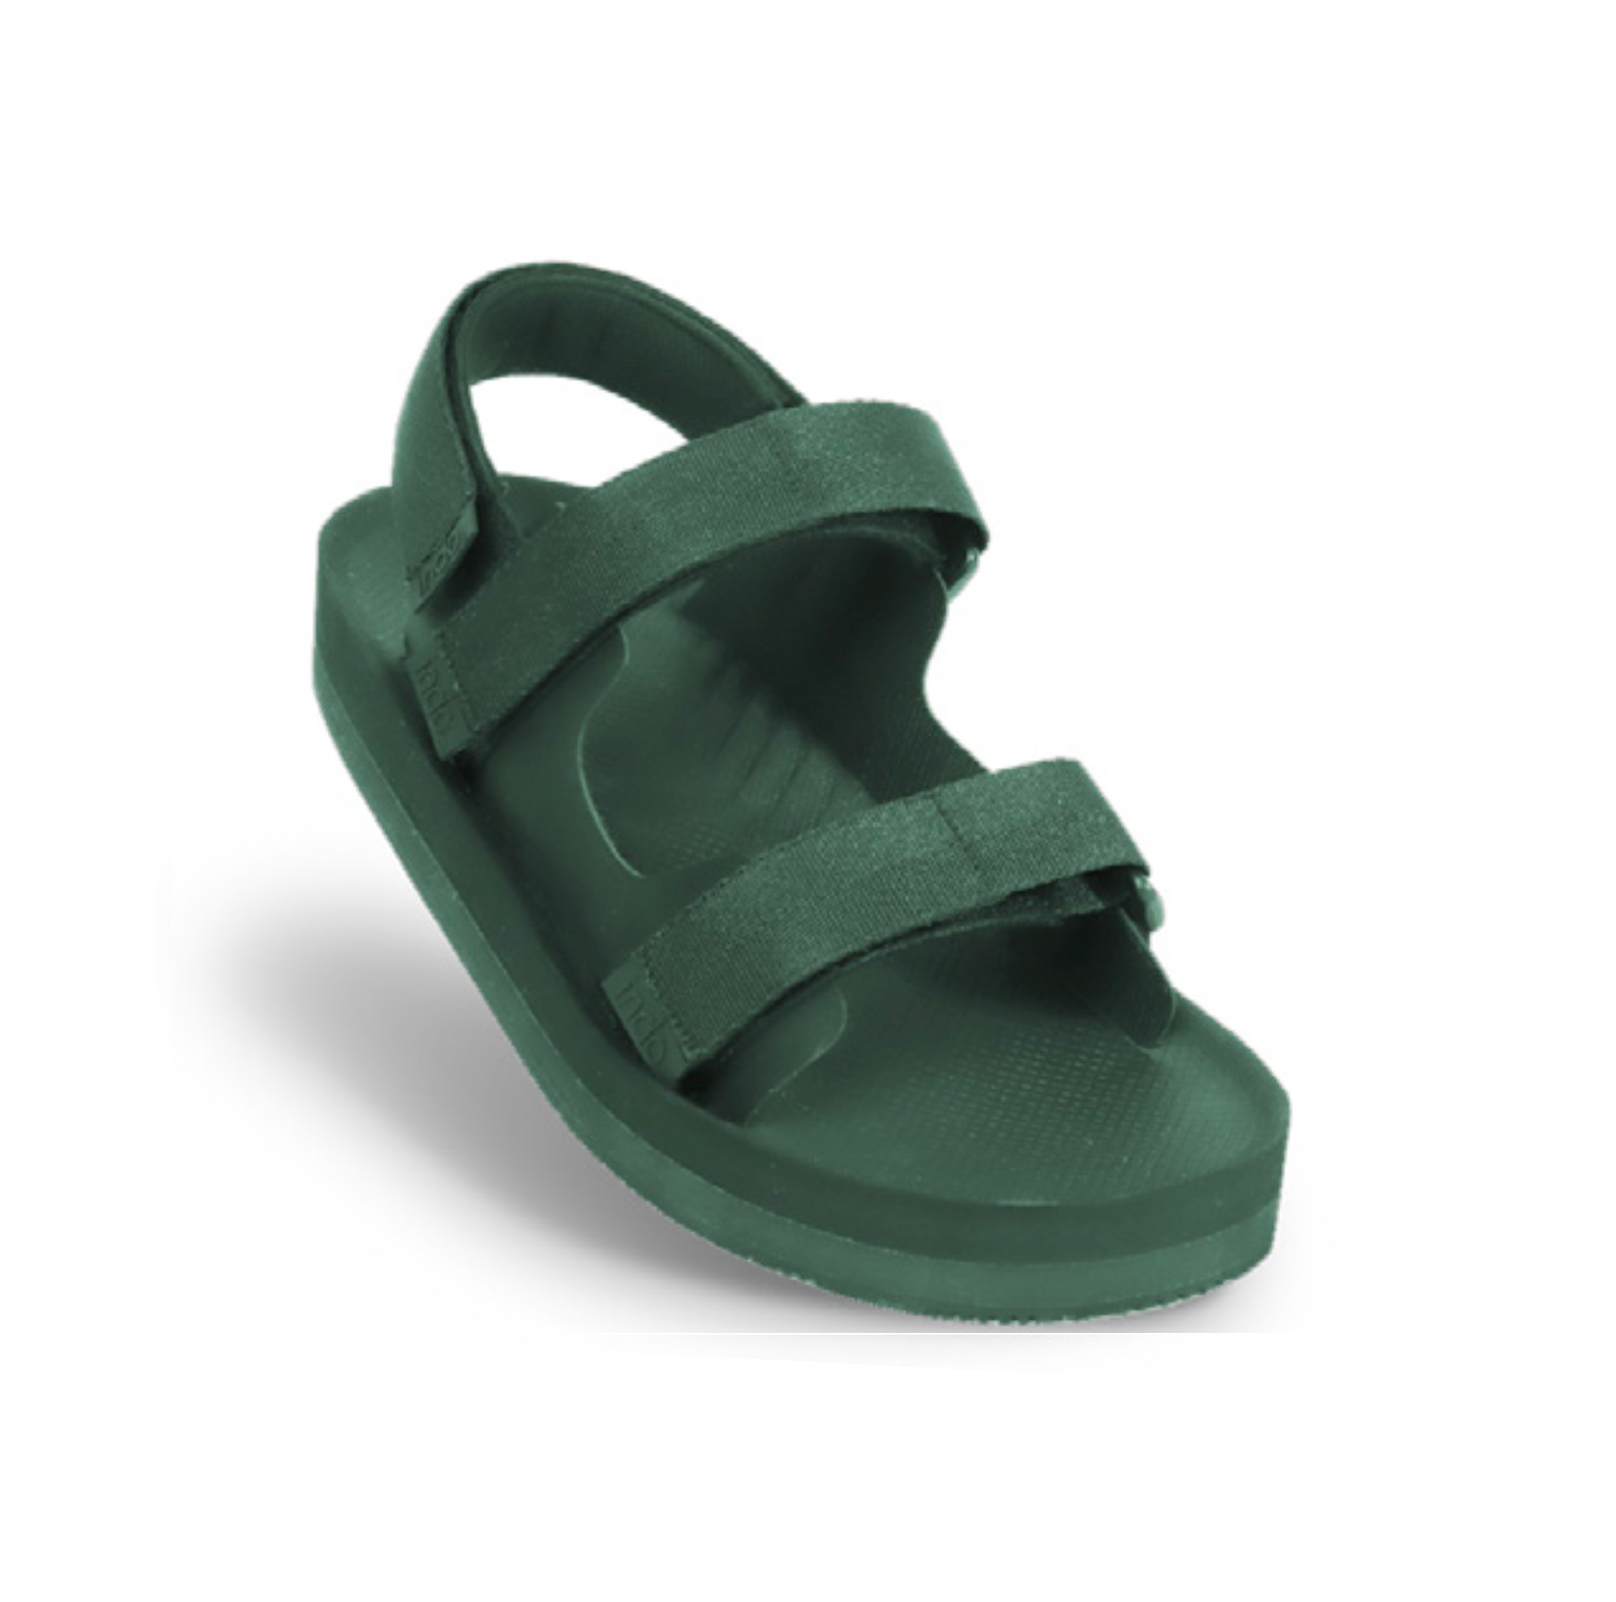 Mens Green Adventure Sandal with adjustable straps